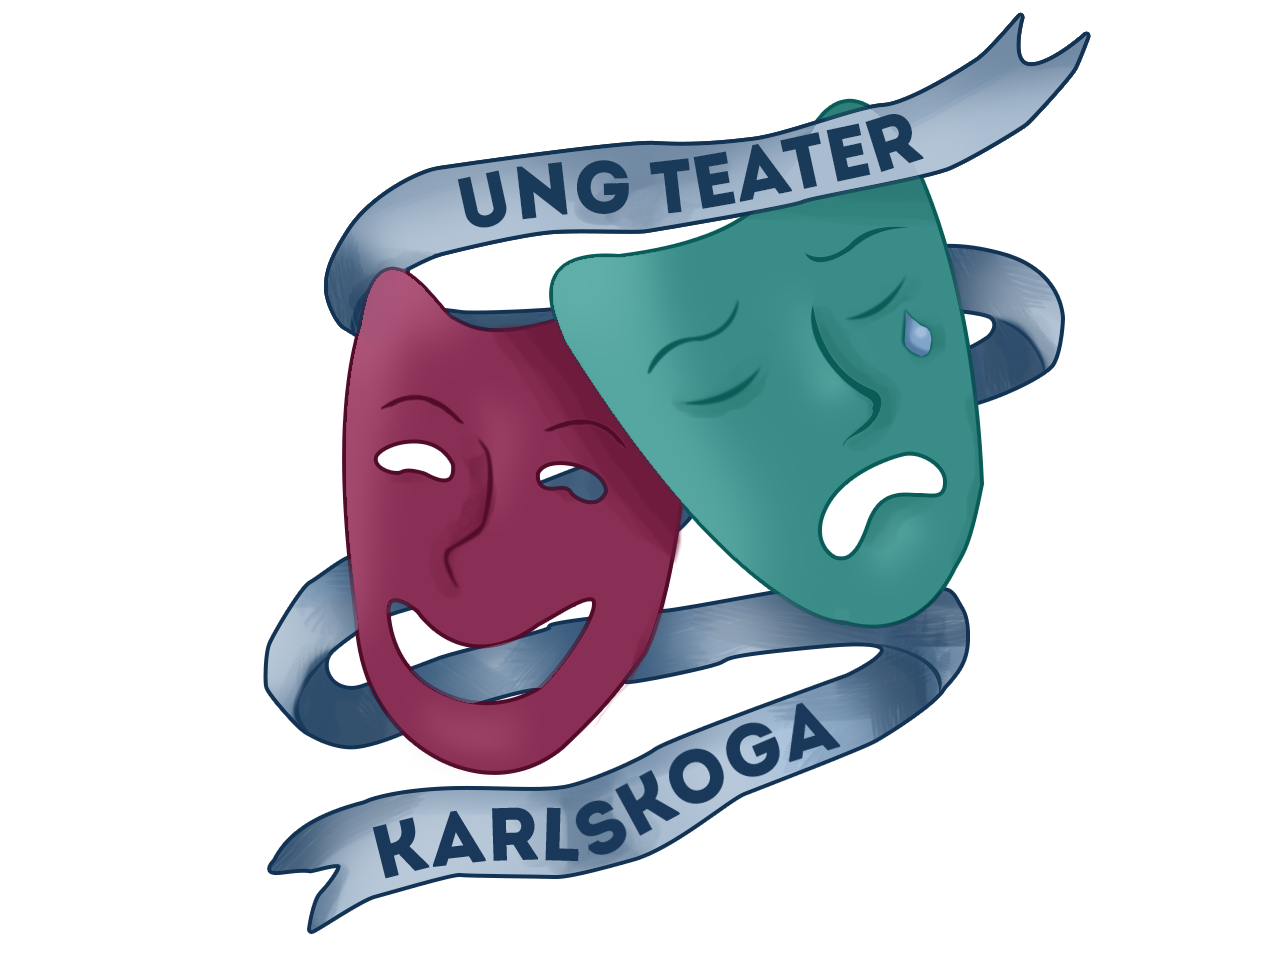 Ung Teater Karlskoga